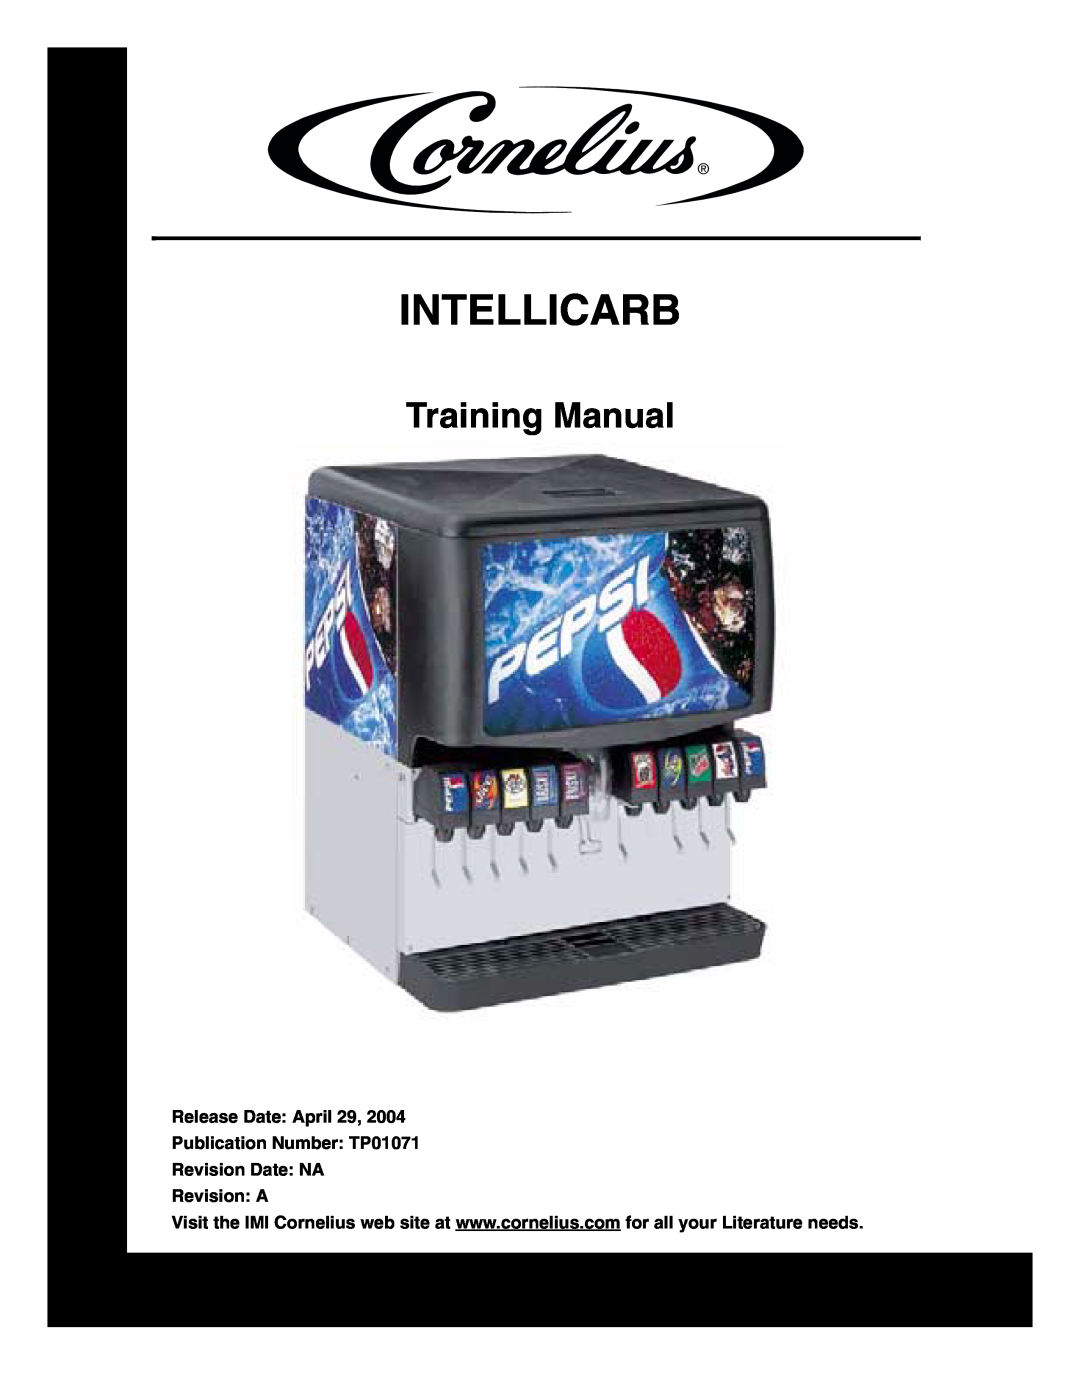 Cornelius Cold Beverage Dispenser manual Training Manual, Intellicarb, Revision A 